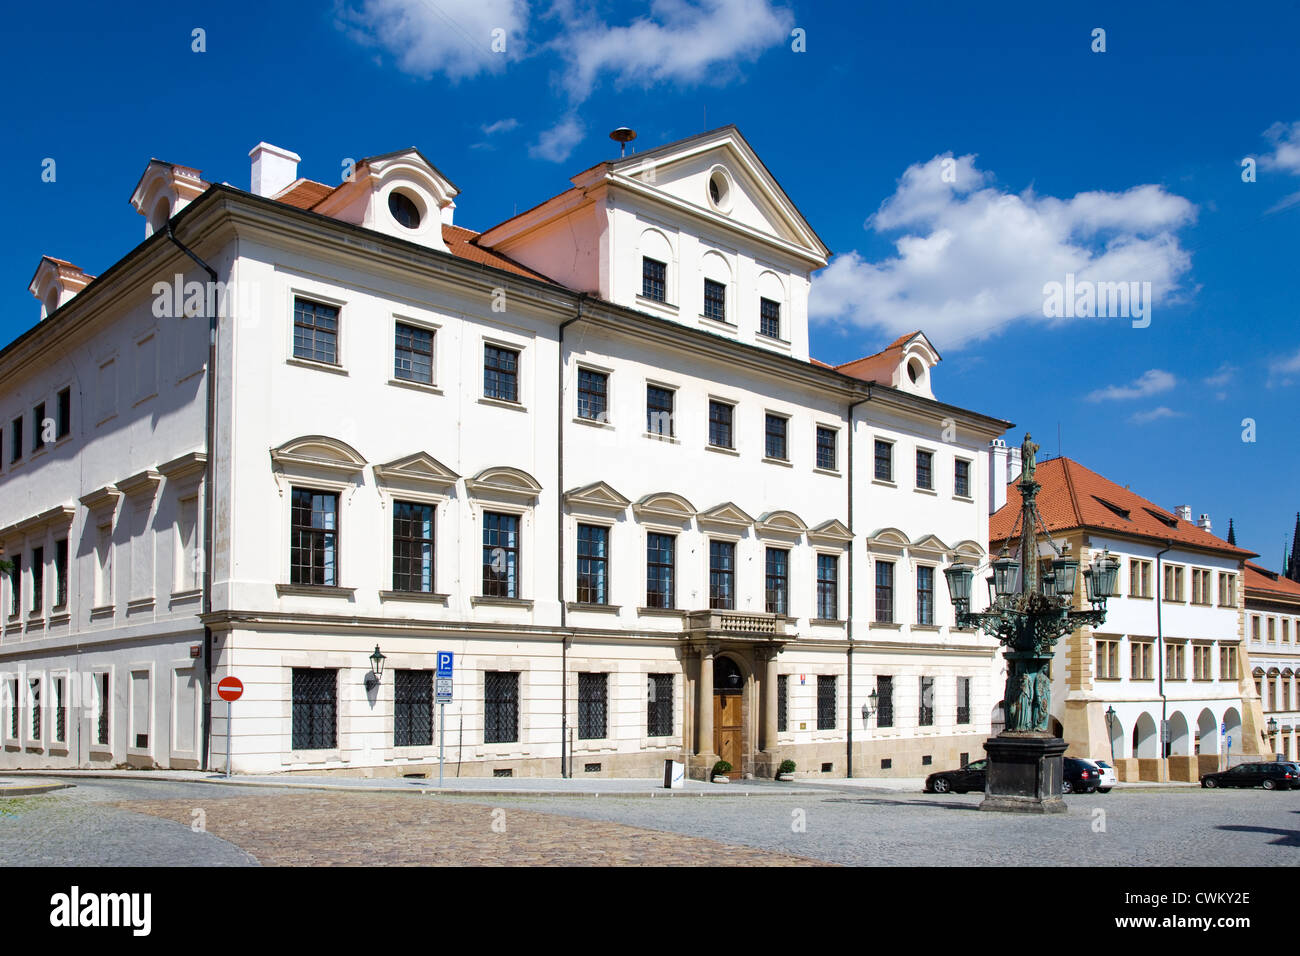 Ministerstvo obrany - hradni straz, Loretanska, Hradcany (UNESCO), Praha, Ceska republika Stock Photo